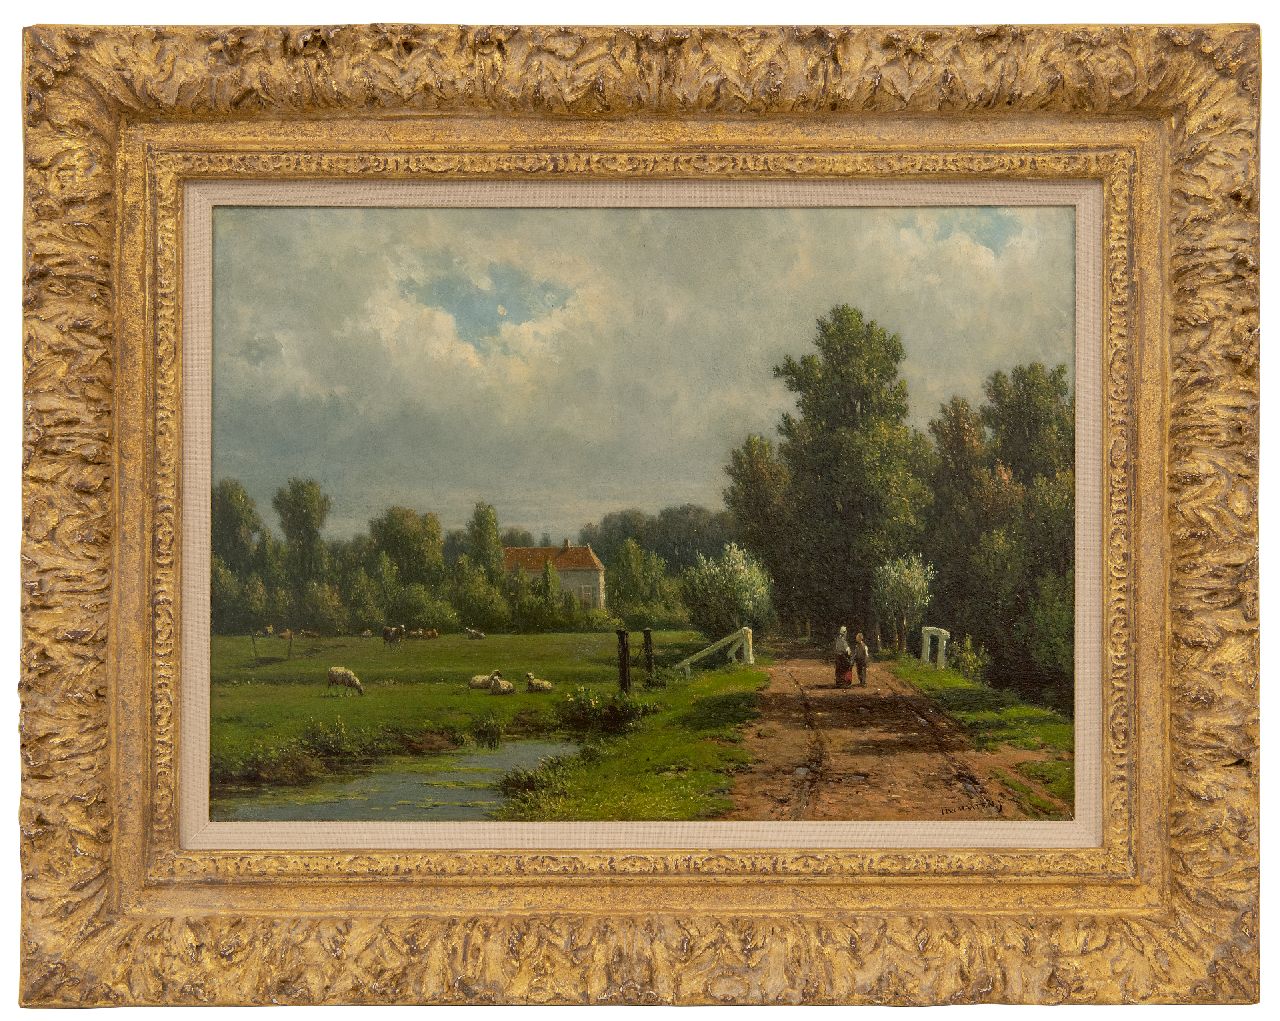 Maaten J.J. van der | Jacob Jan van der Maaten | Paintings offered for sale | Conversation on a country road, oil on panel 25.7 x 36.0 cm, signed l.r.